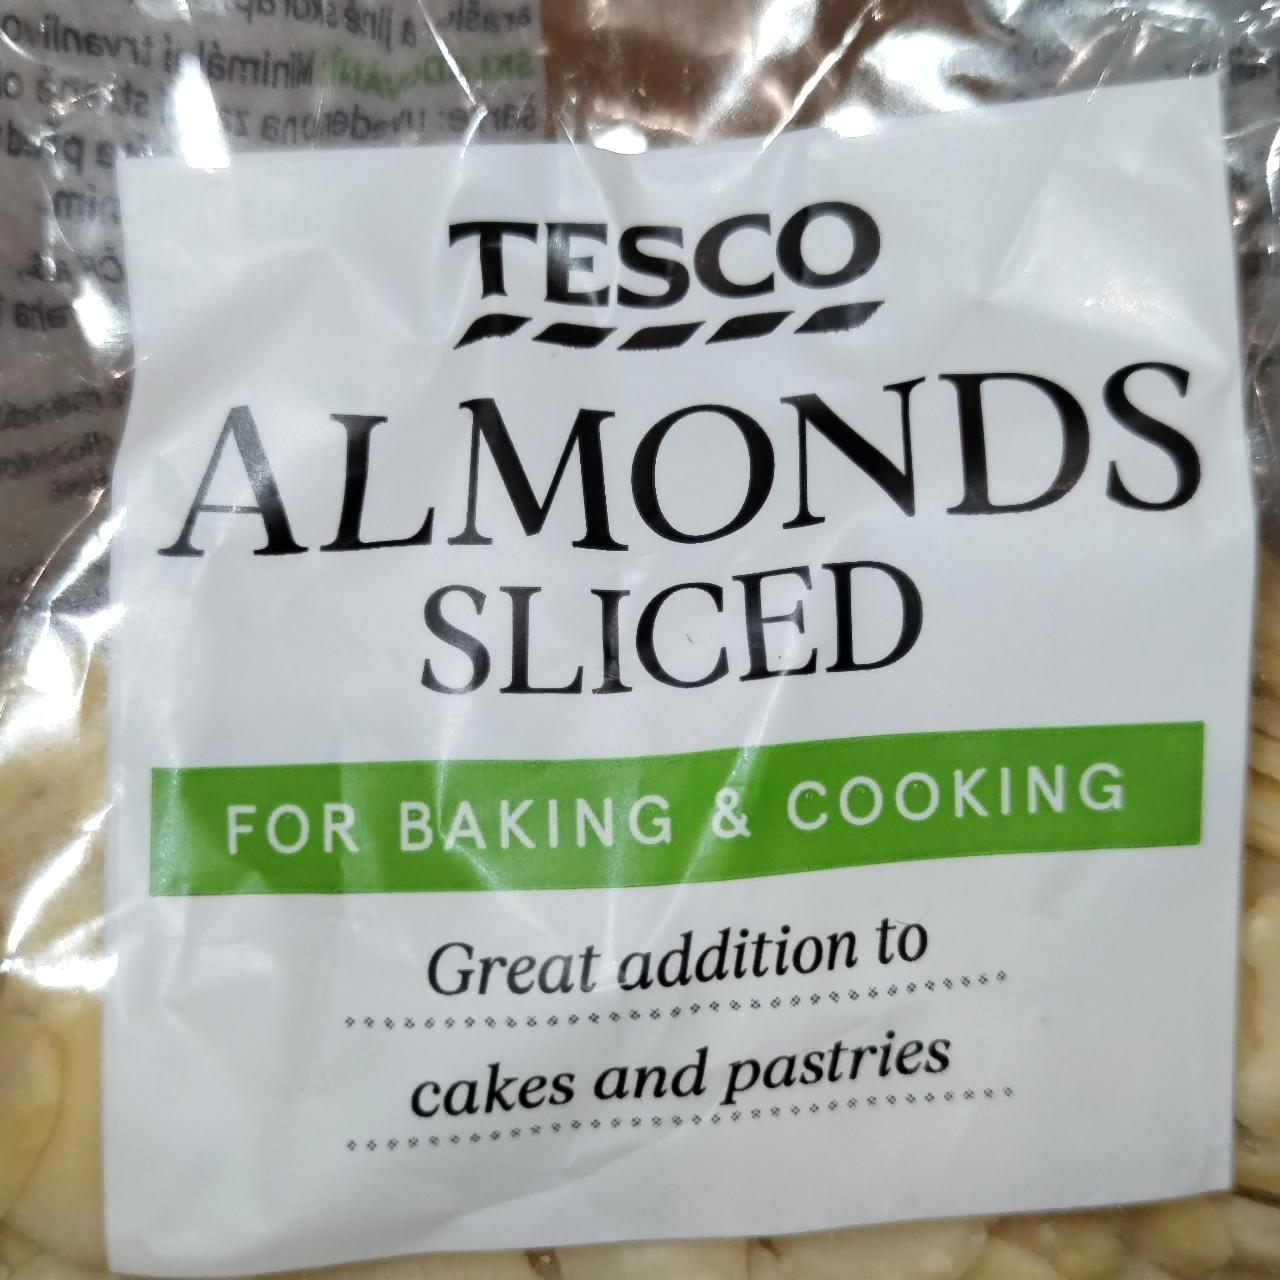 Képek - Almonds sliced Tesco